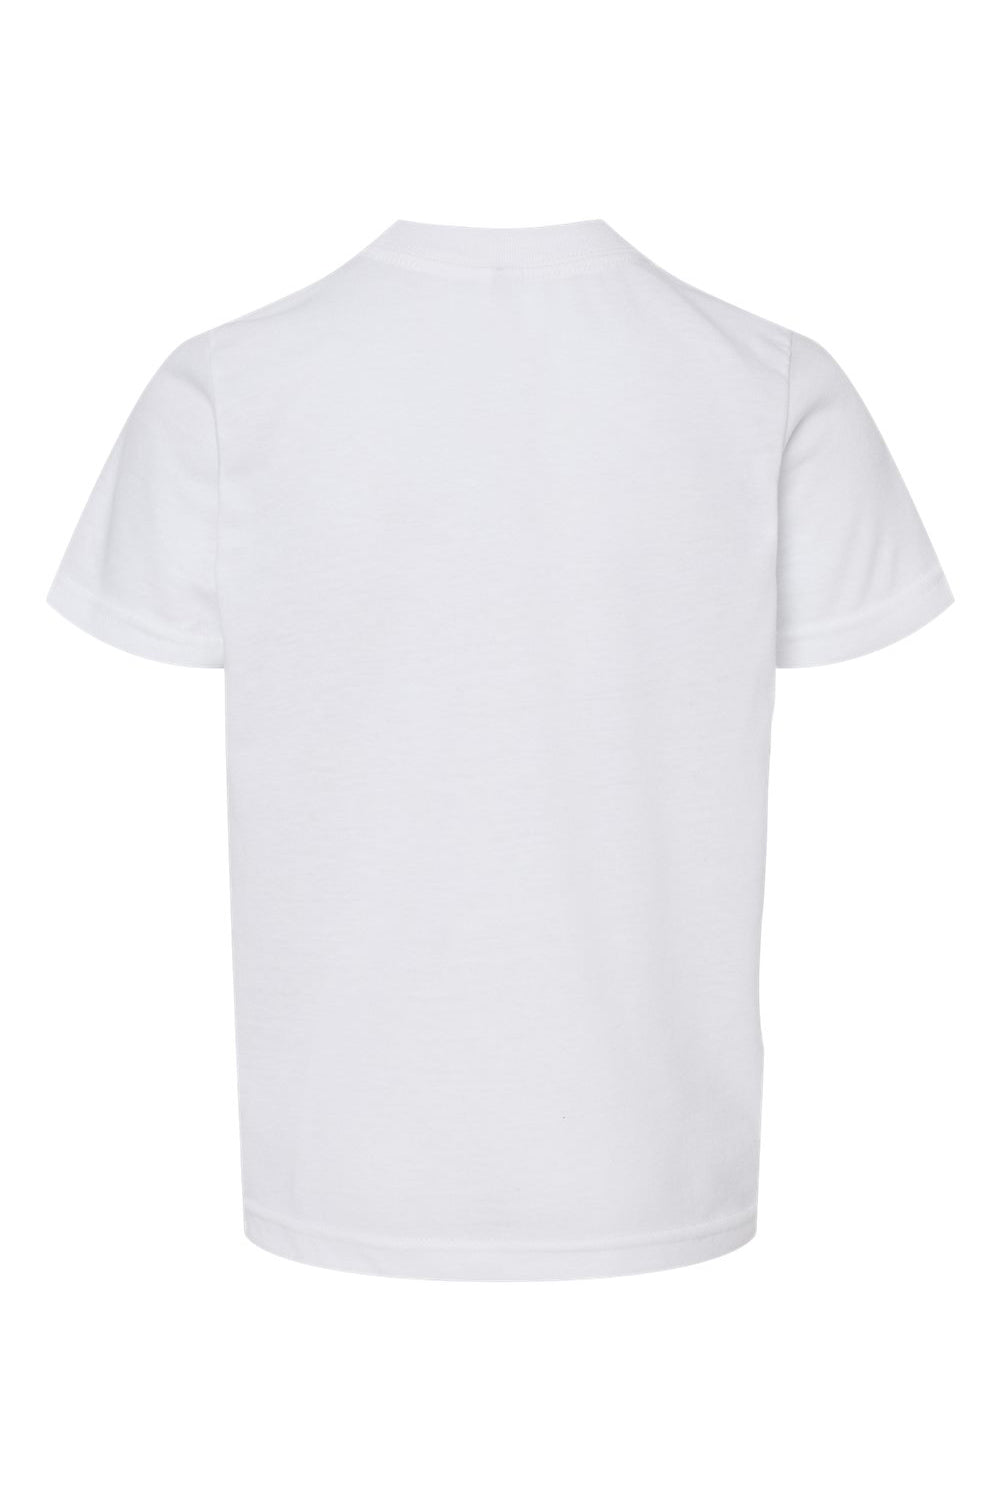 Tultex 265 Youth Poly-Rich Short Sleeve Crewneck T-Shirt White Flat Back